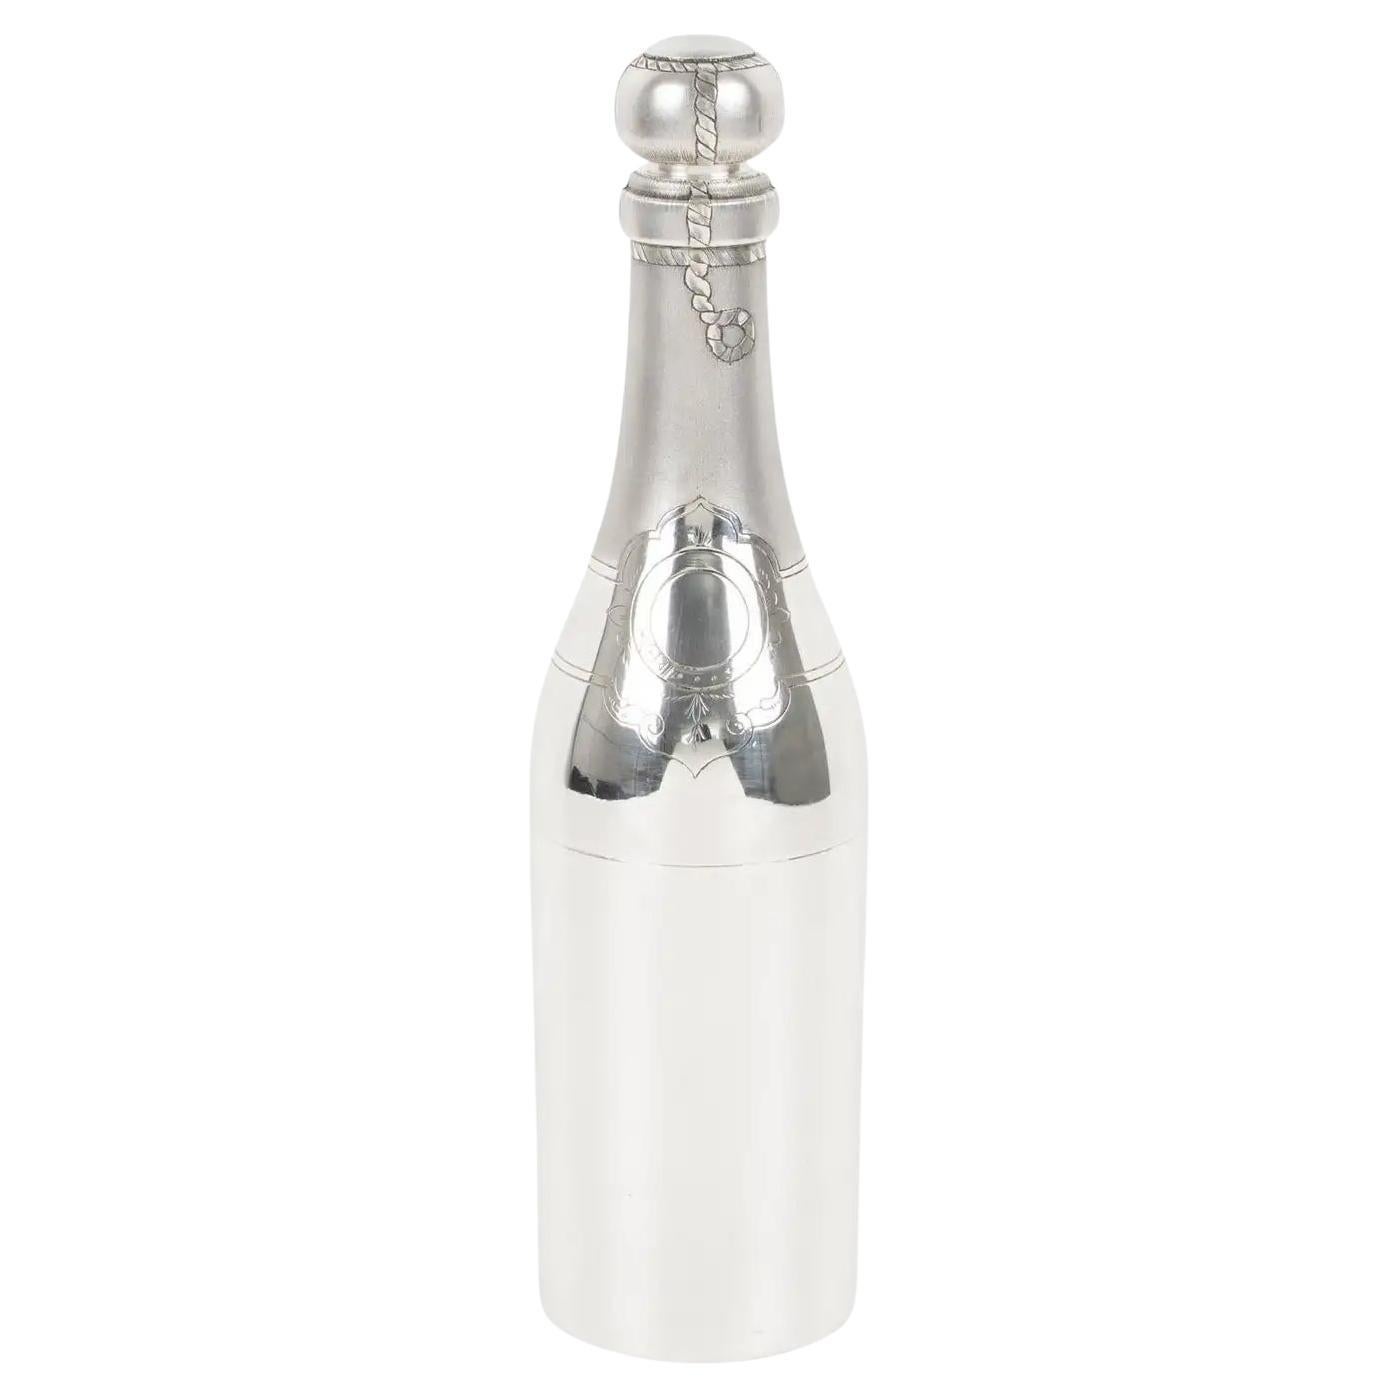 Versilberter Martini-Cocktailshaker in Champagner-Flaschenform im Art déco-Stil